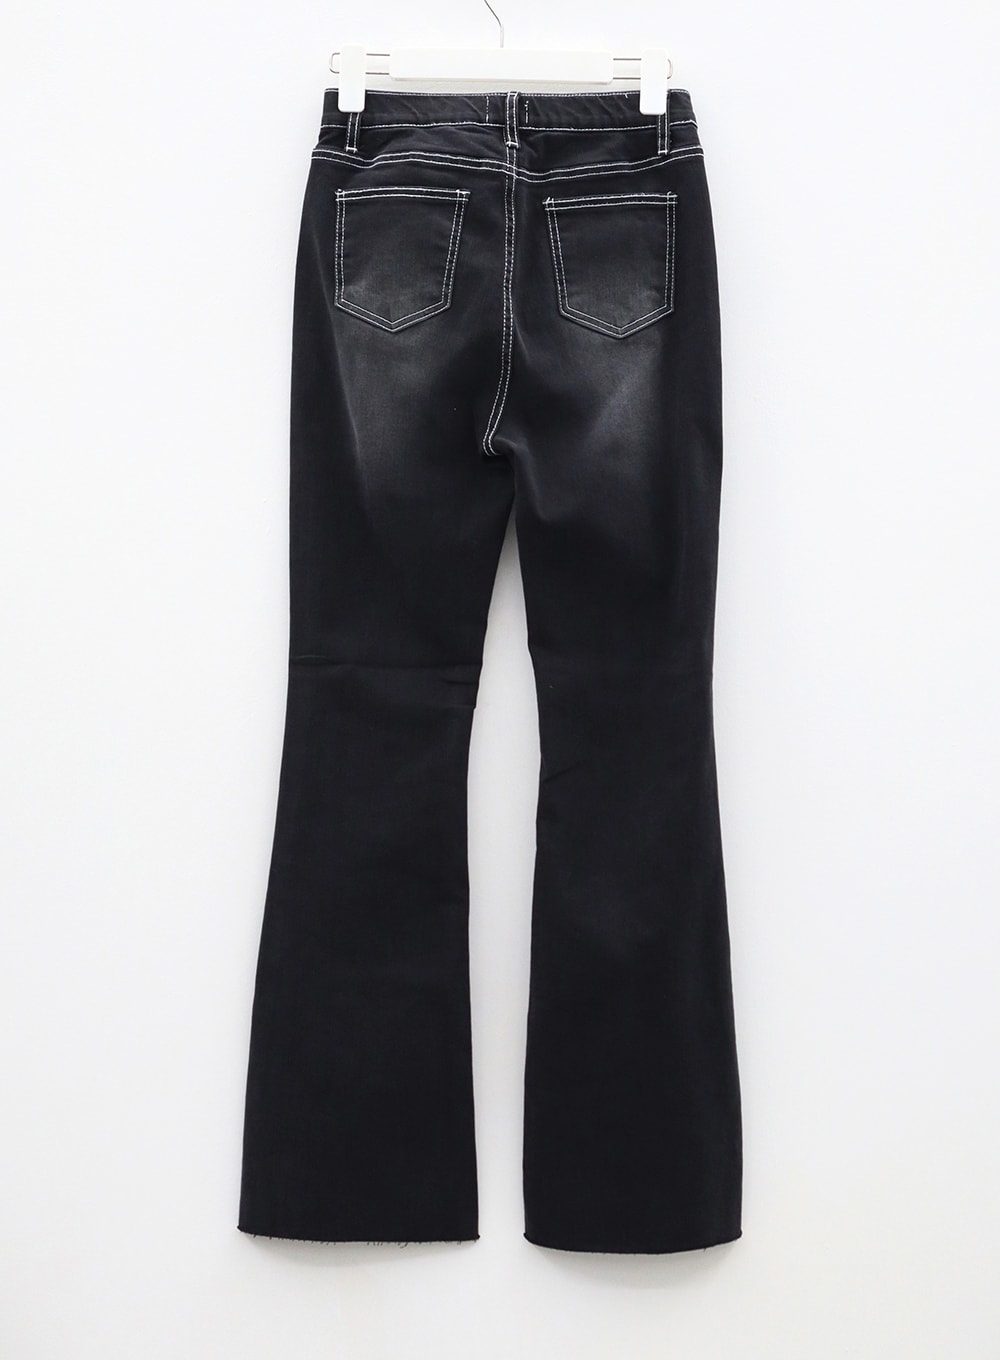 Black Bootcut Jeans BF309